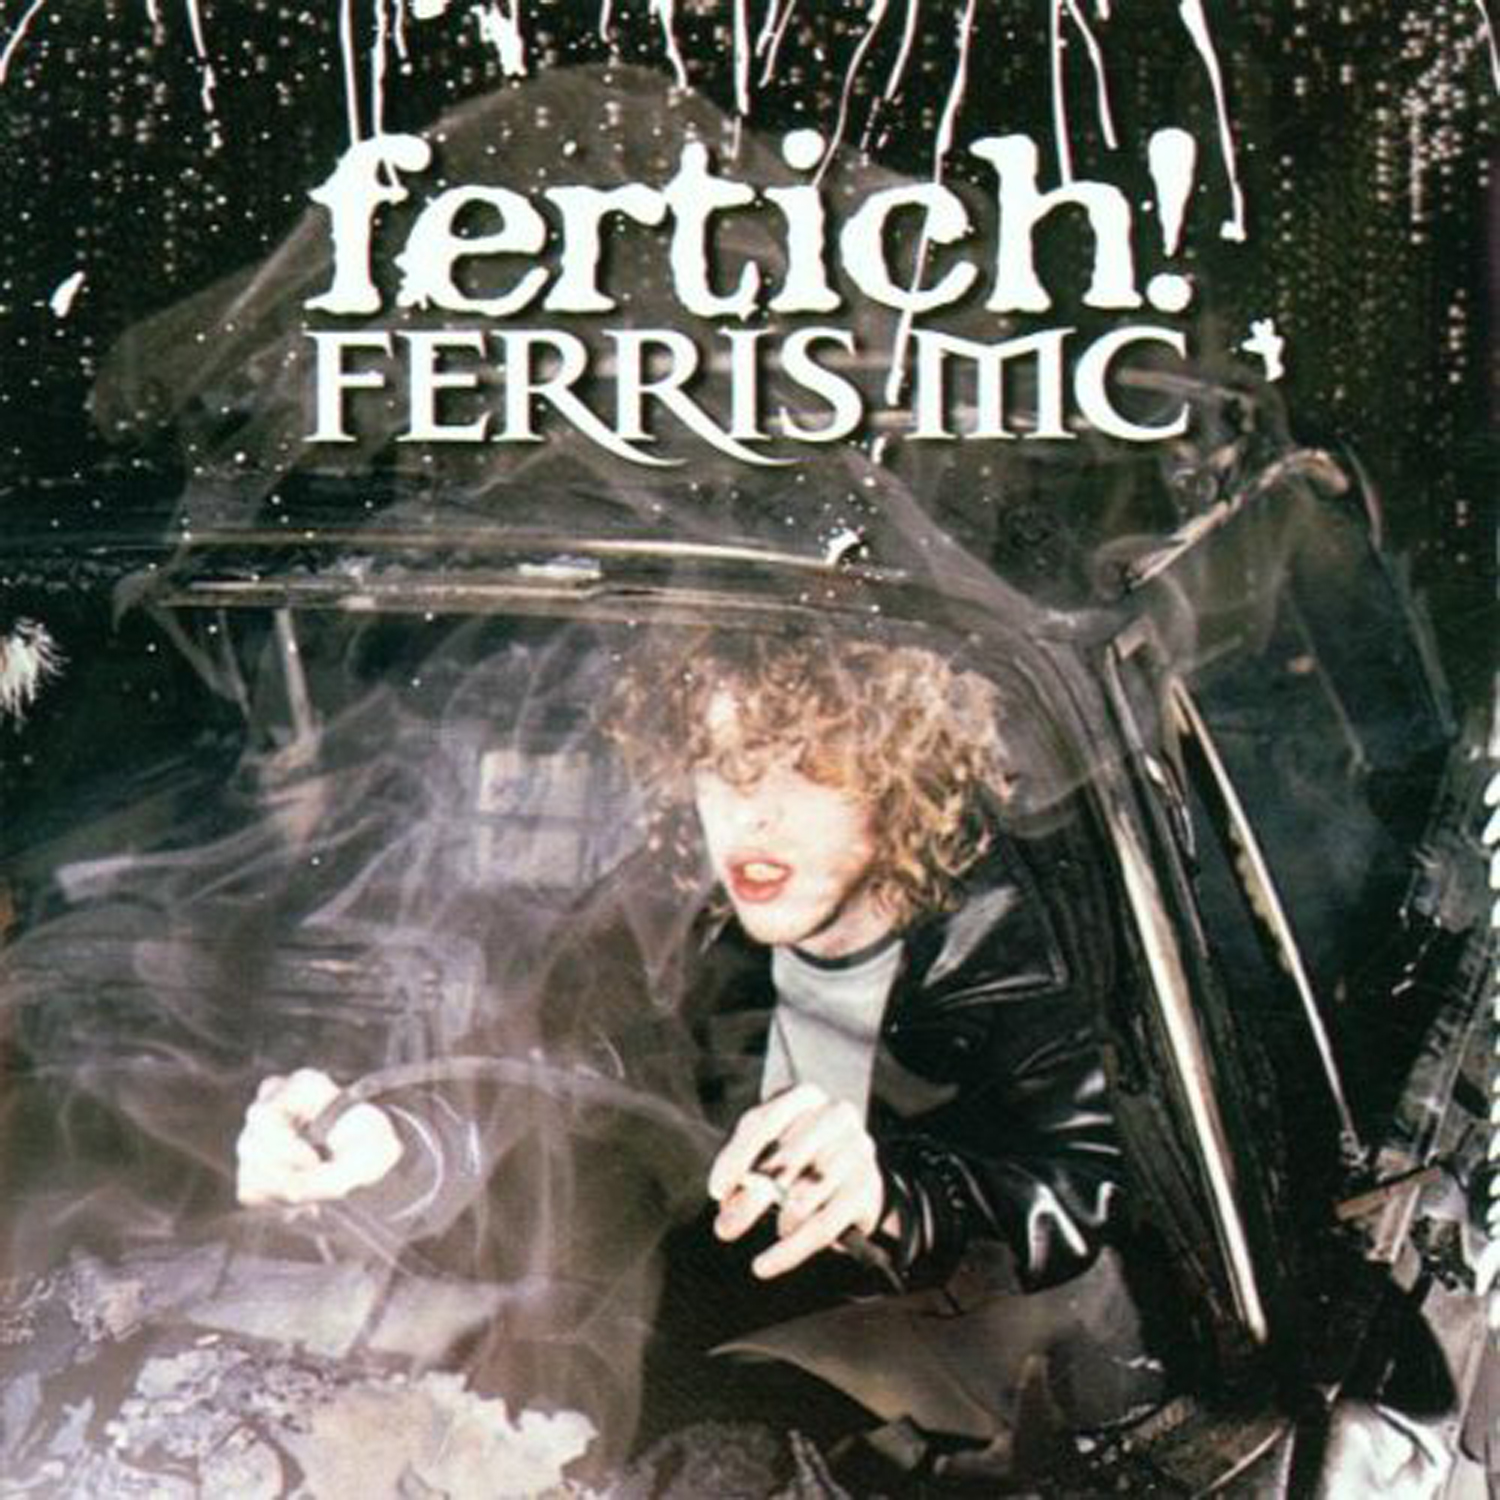 Ferris MC - (Vinyl) Fertich! 